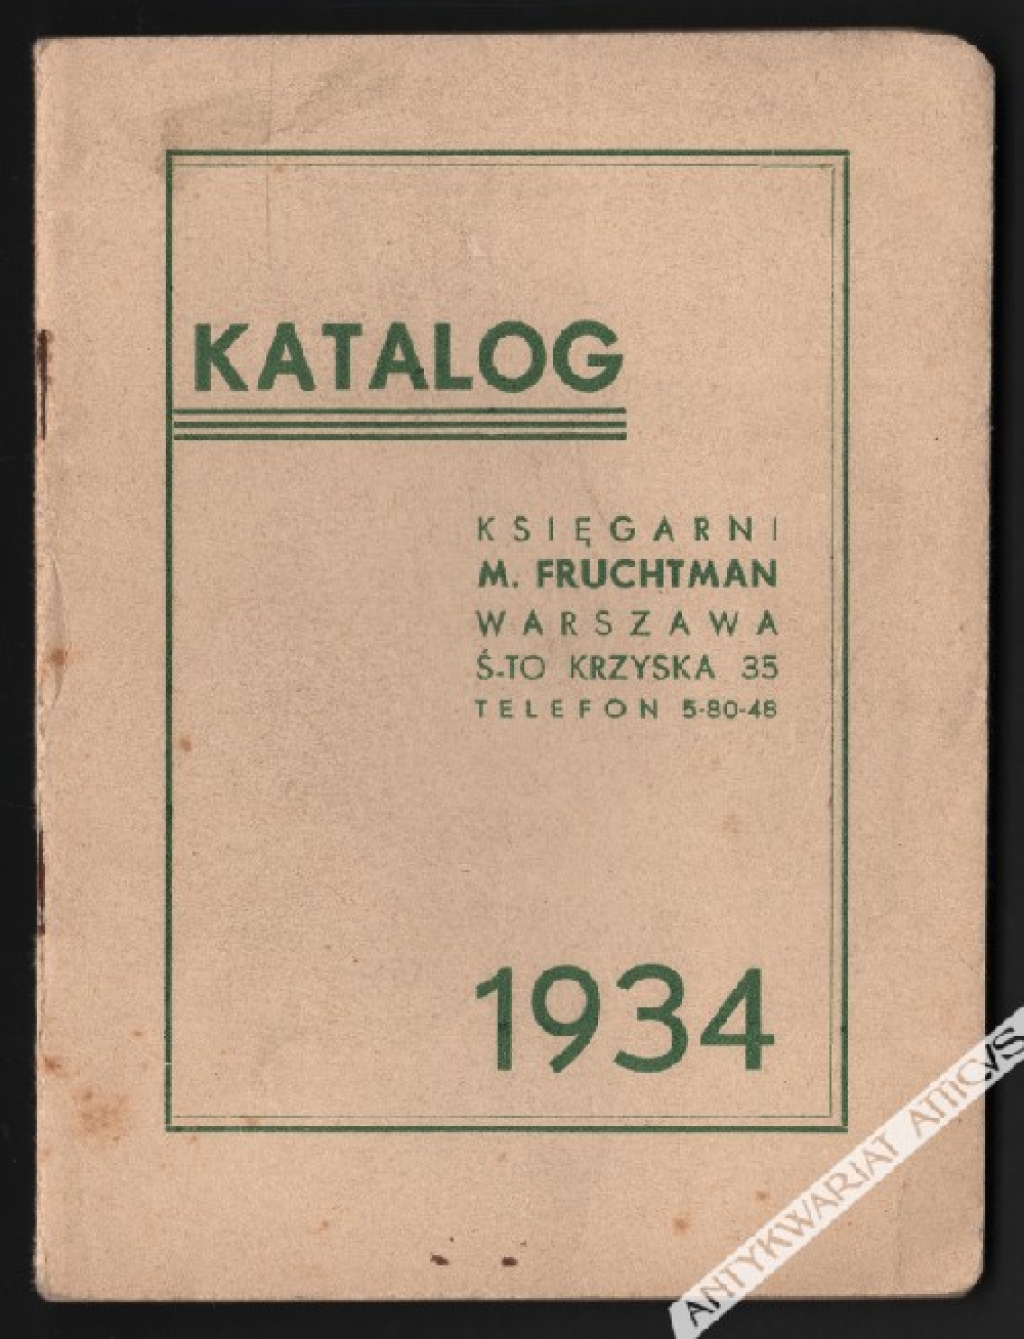 Katalog Księgarni M. Fruchtman rok 1934, Warszawa S-to Krzyska 35 telefon 5-80-48